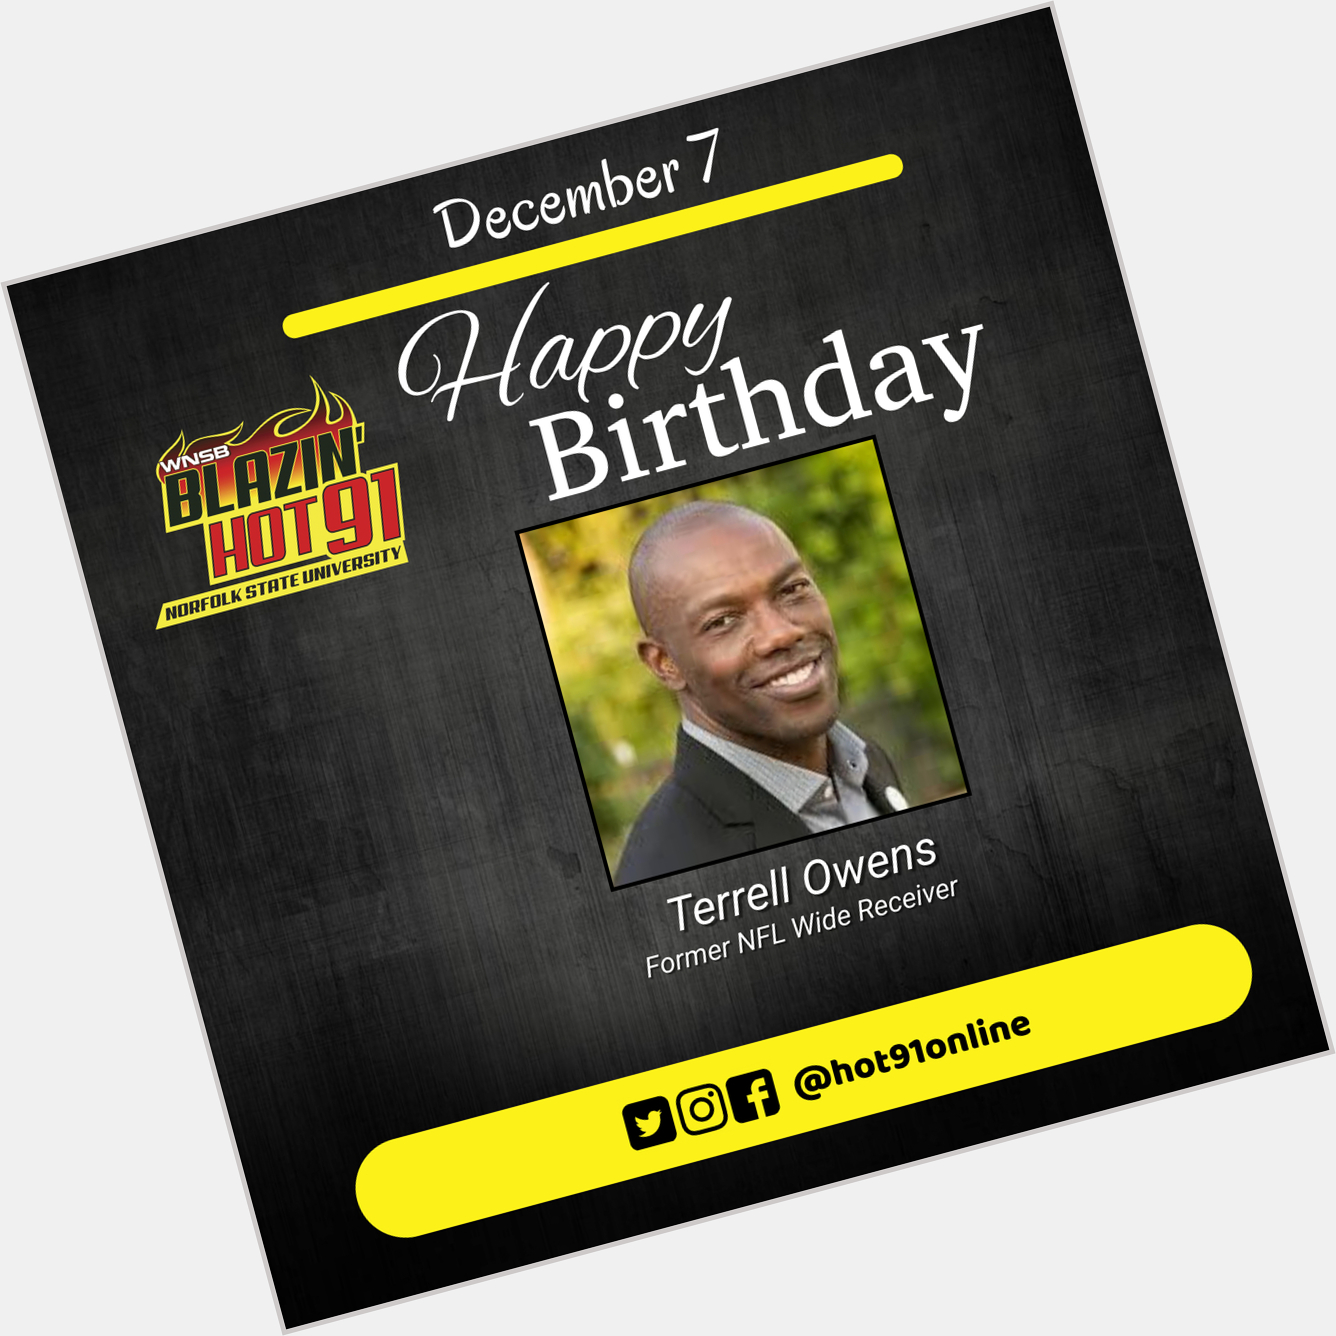 Happy Blazin\ Hot birthday to Terrell Owens   